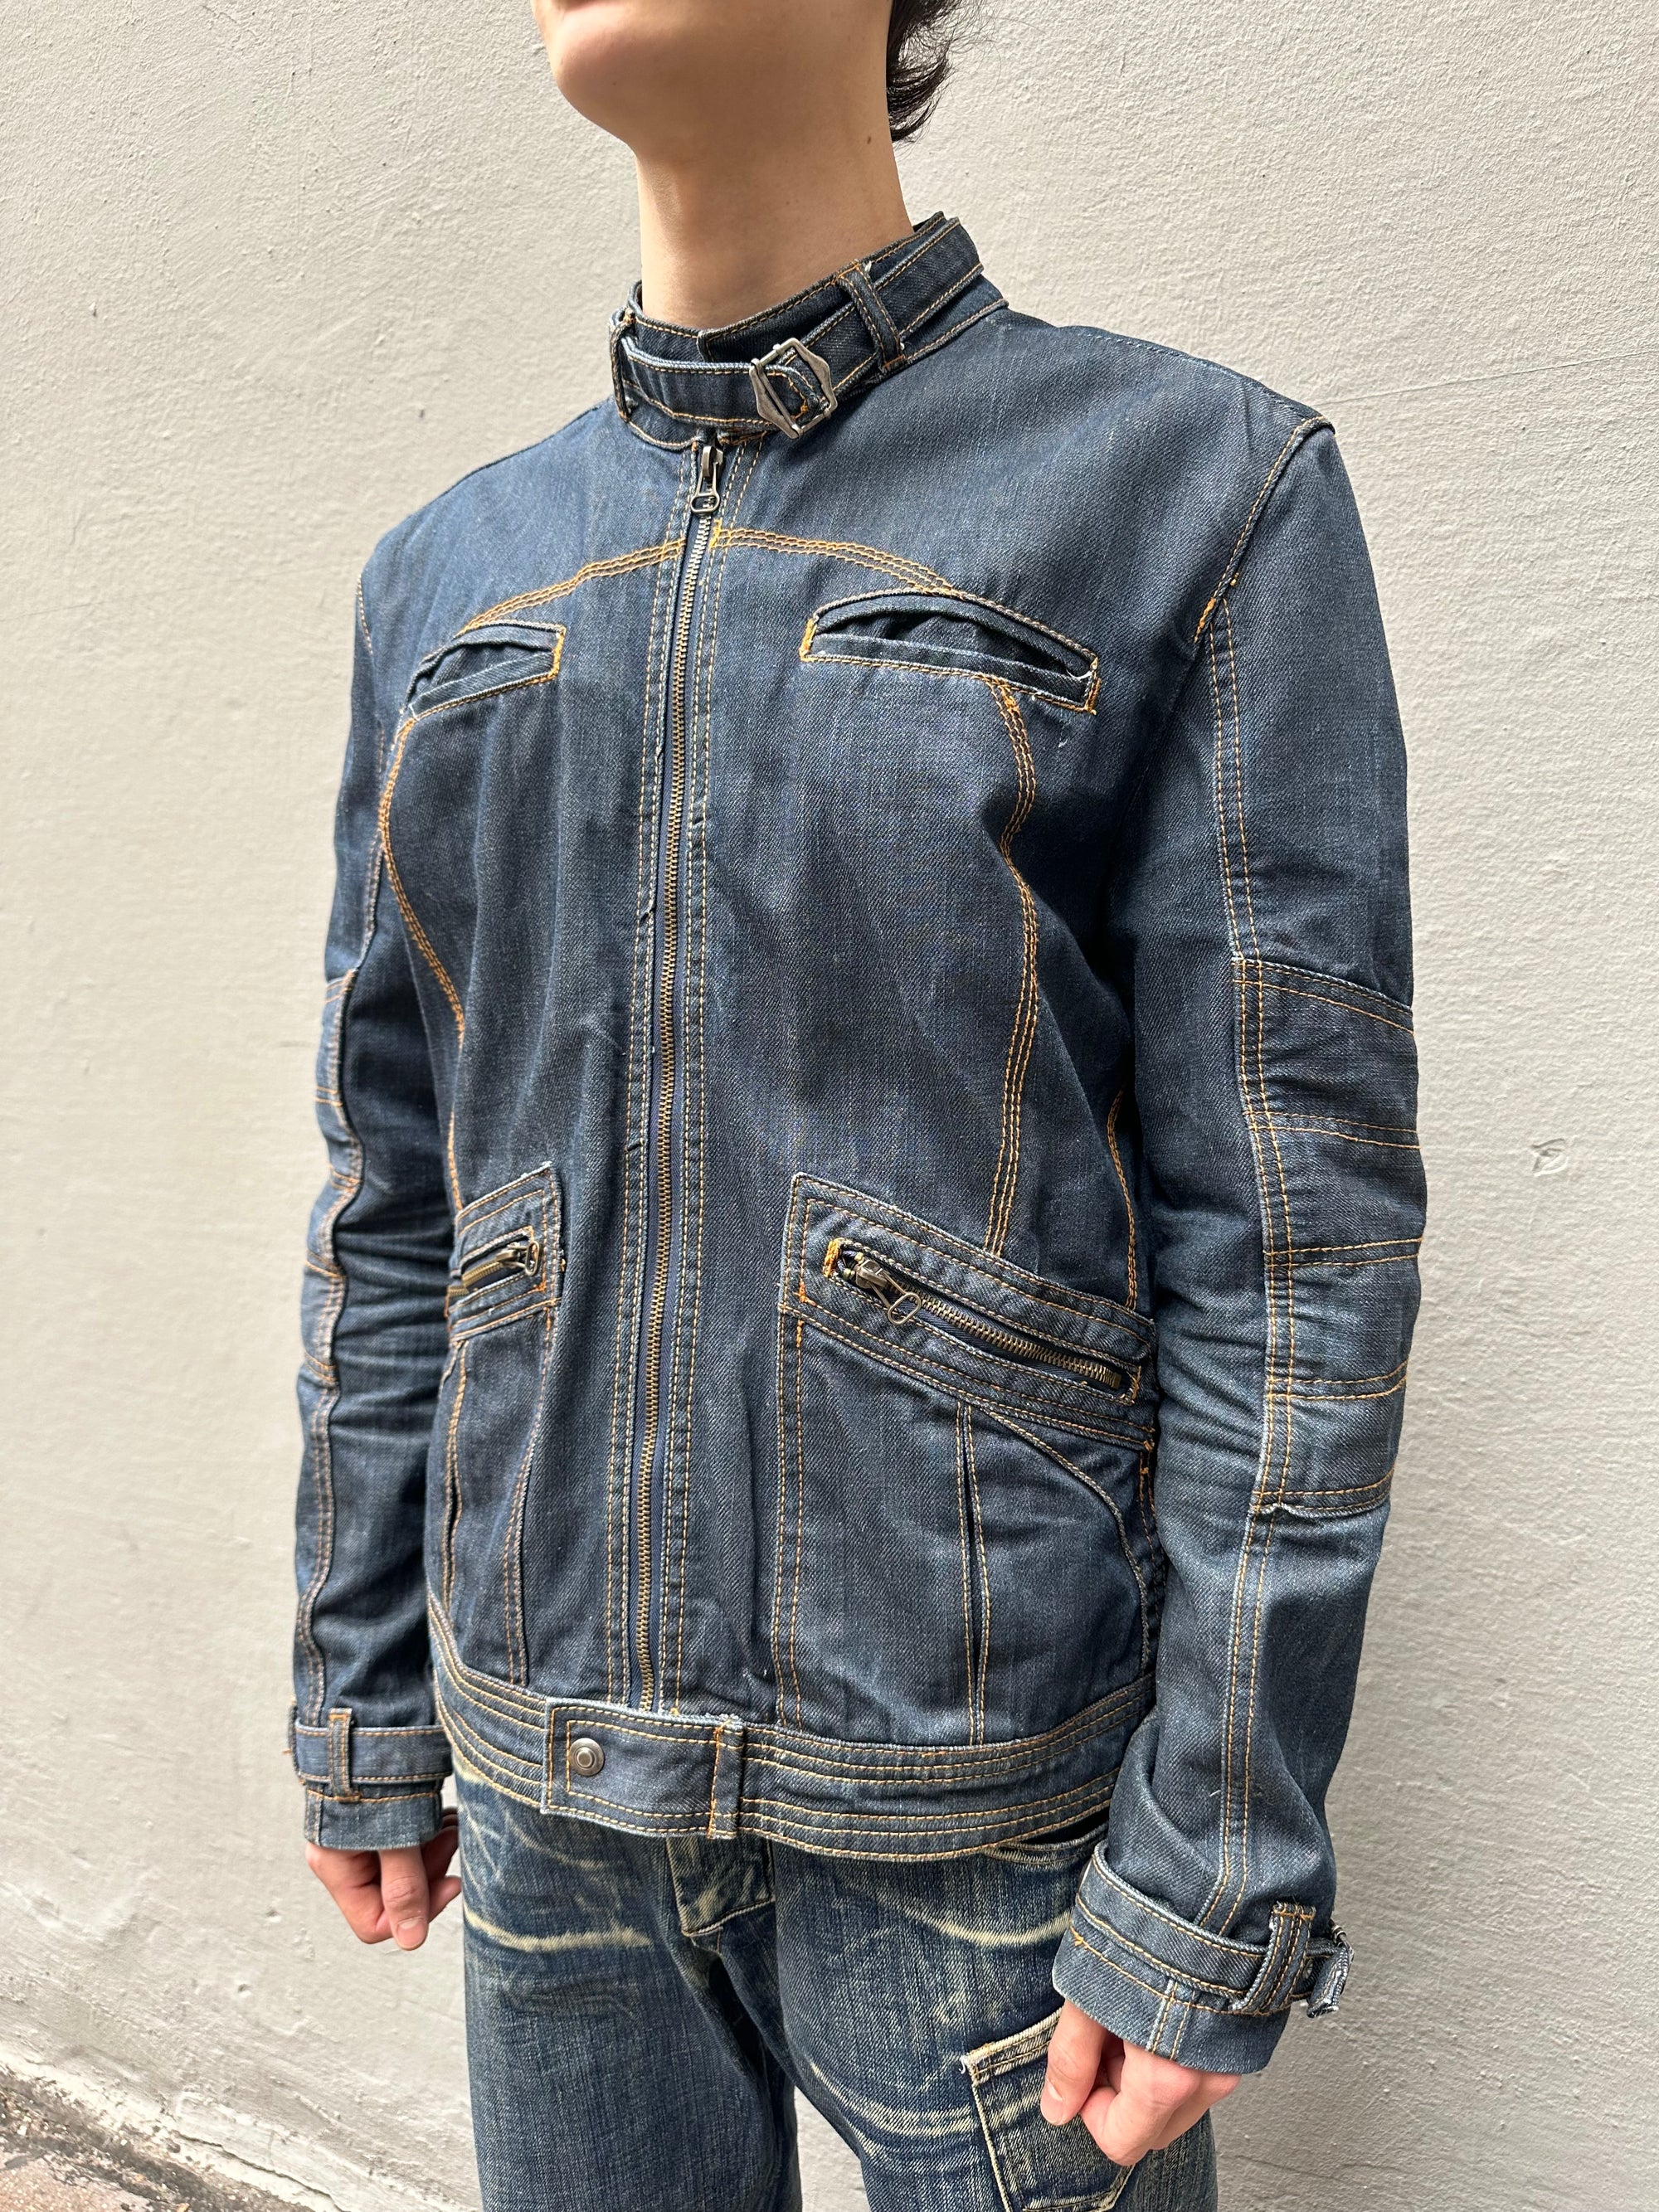 Vintage S-Boy Jeans Jacket M/L